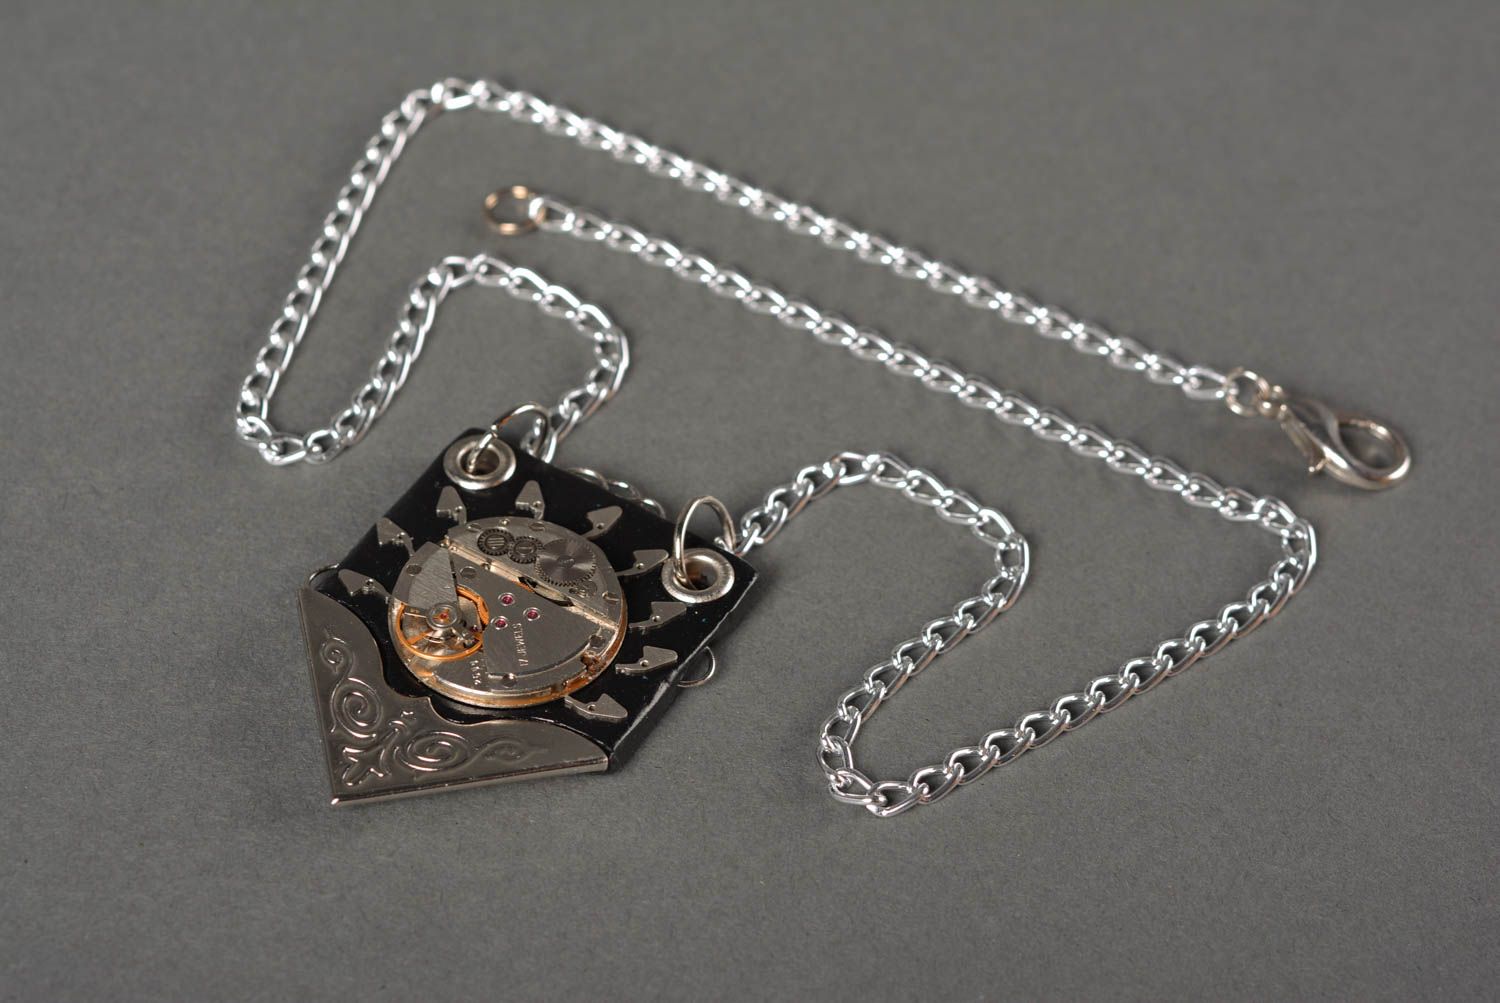 Handmade pendant designer pendant unusual accessory gift ideas beautiful jewelry photo 3